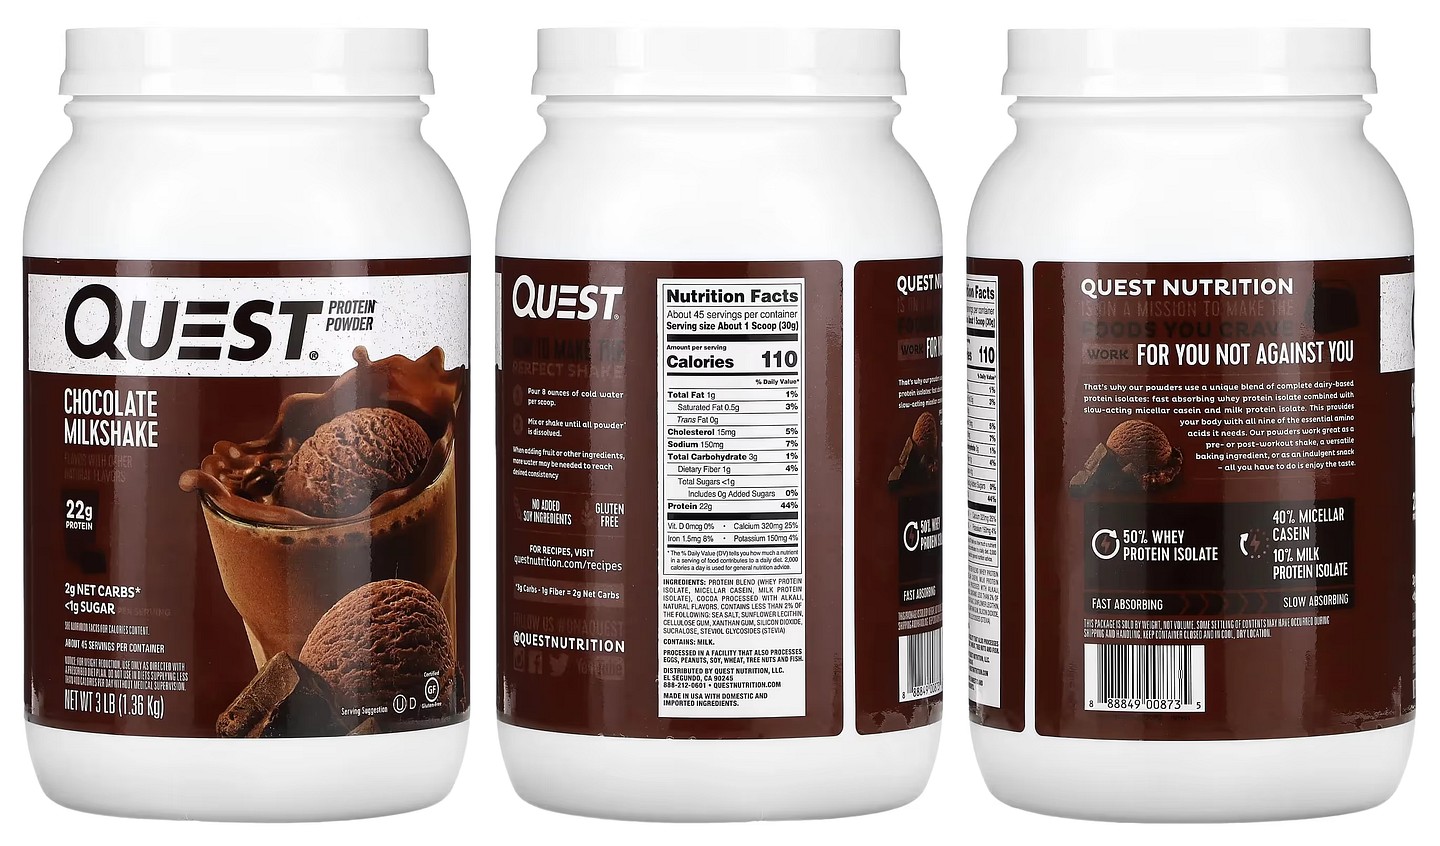 Quest Nutrition, Protein Powder, Chocolate Milkshake packaging